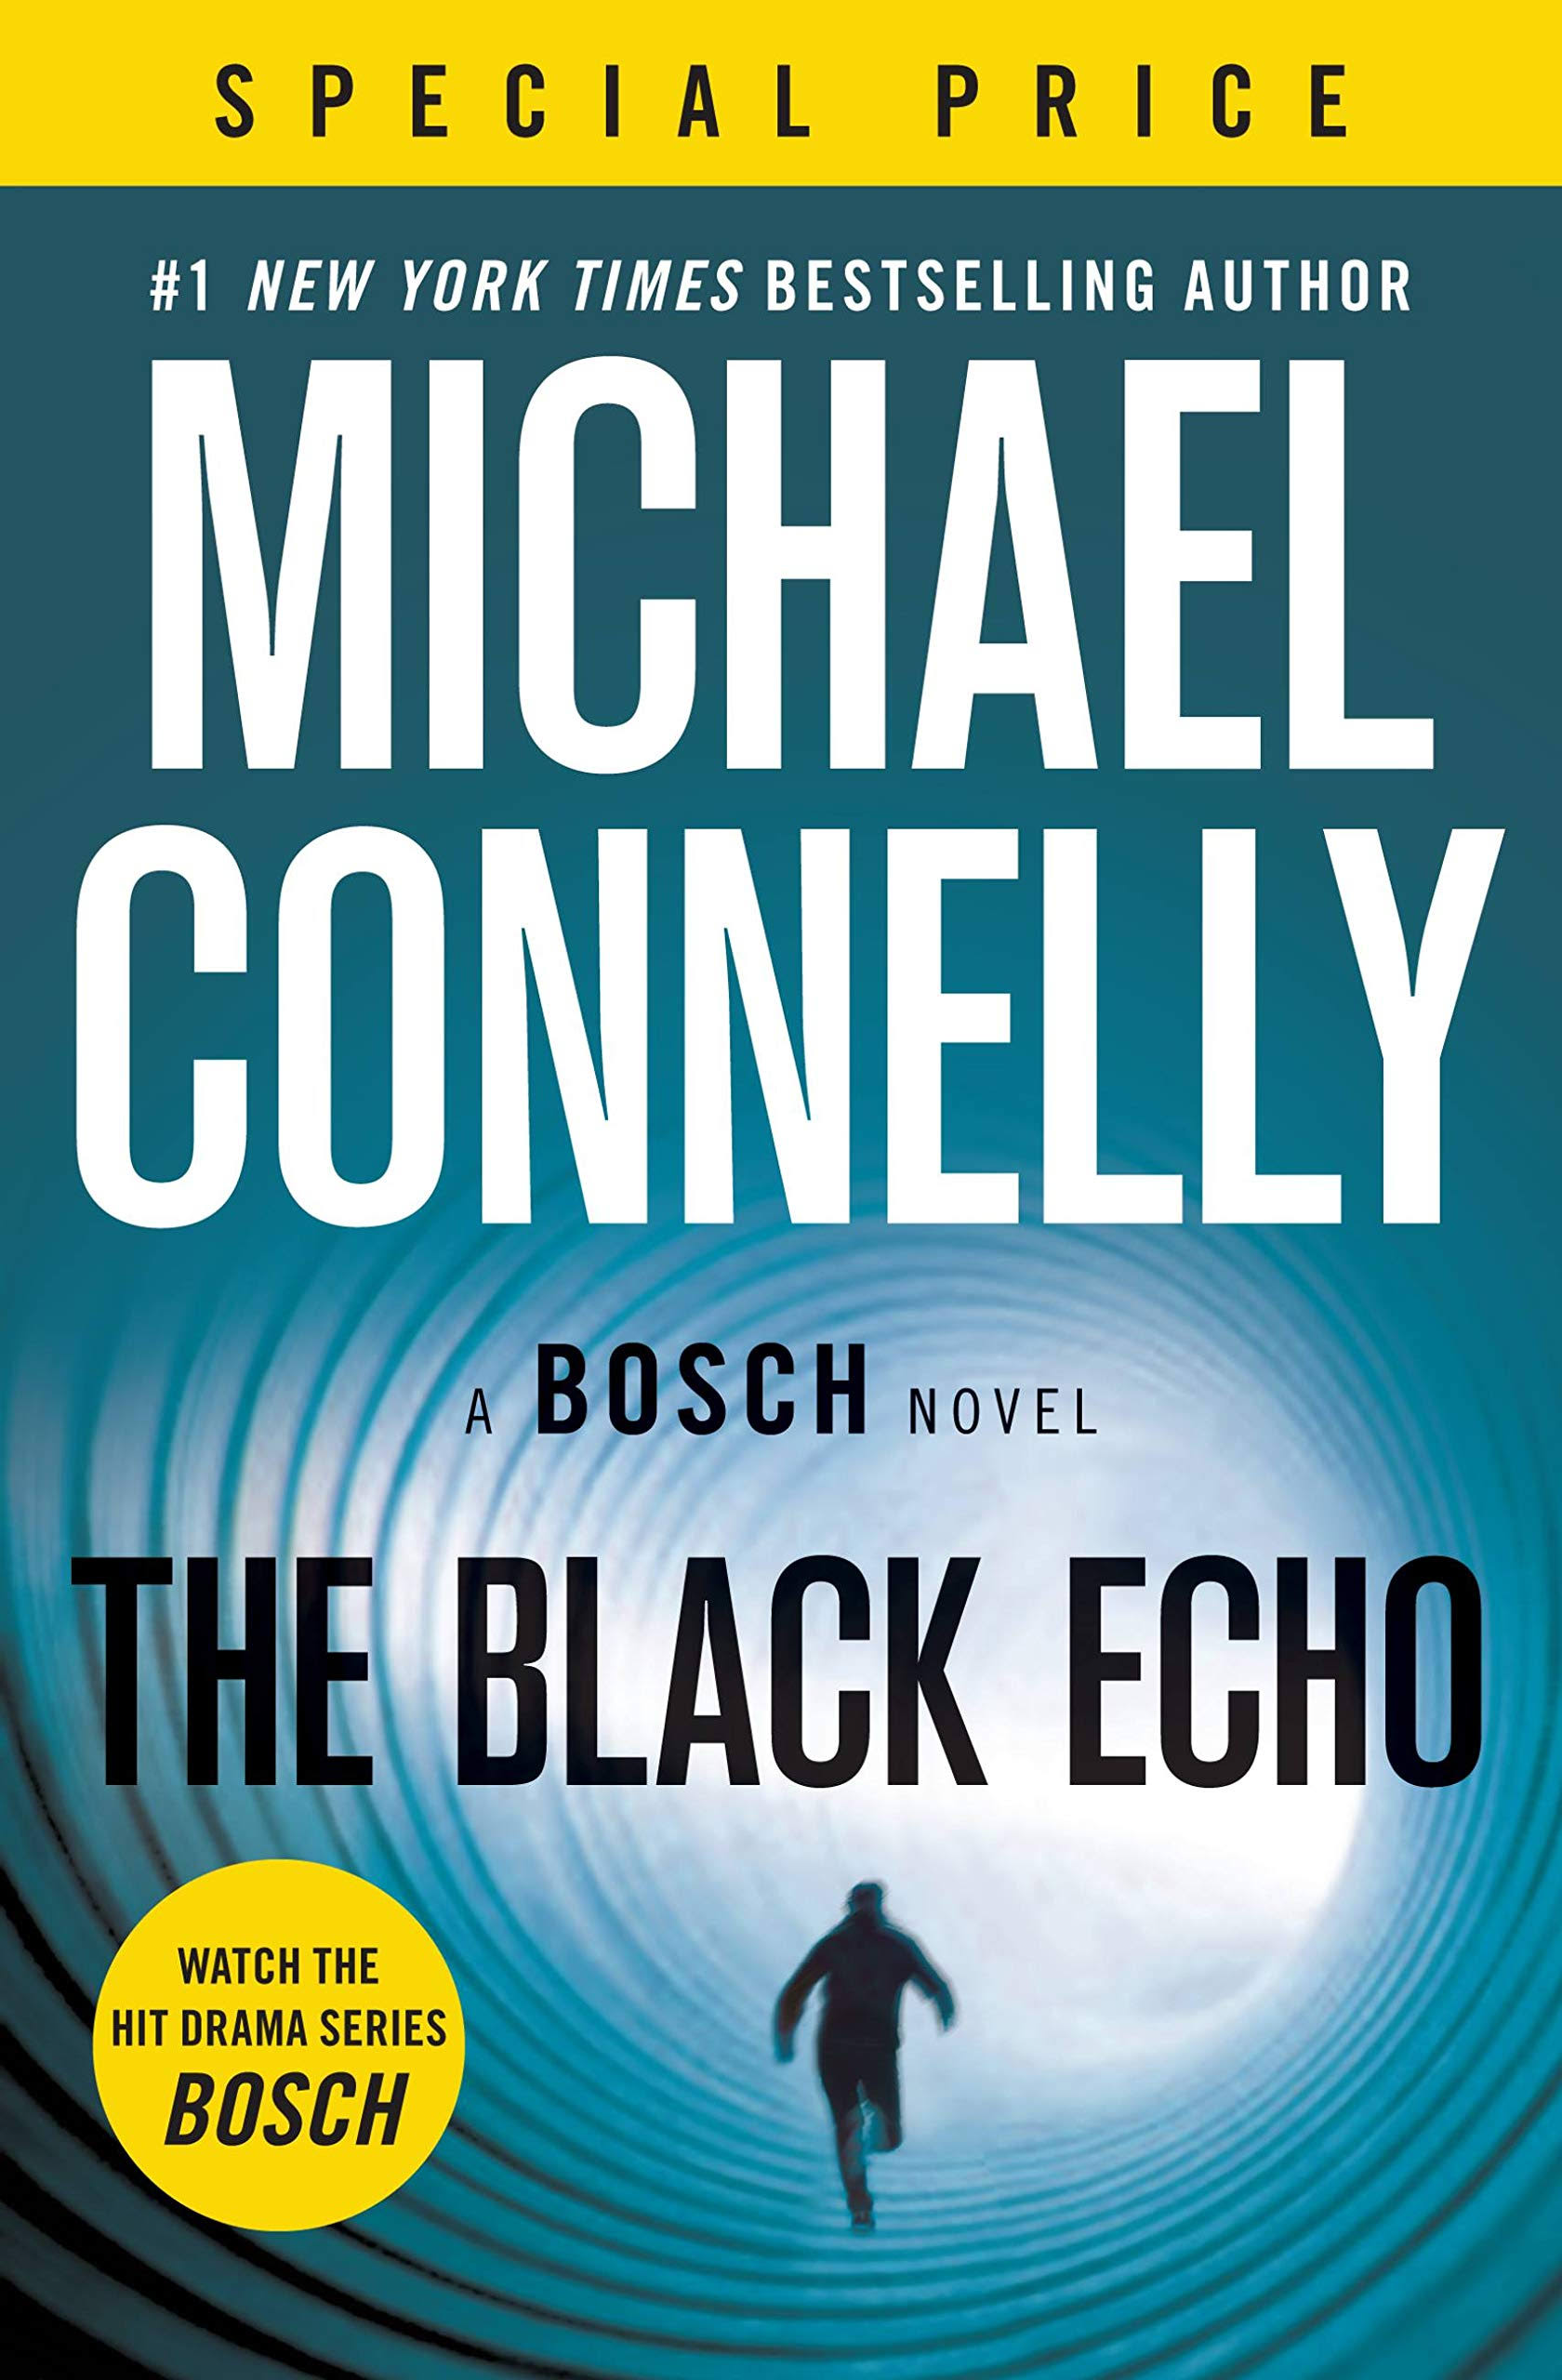 The Black Echo [Book]